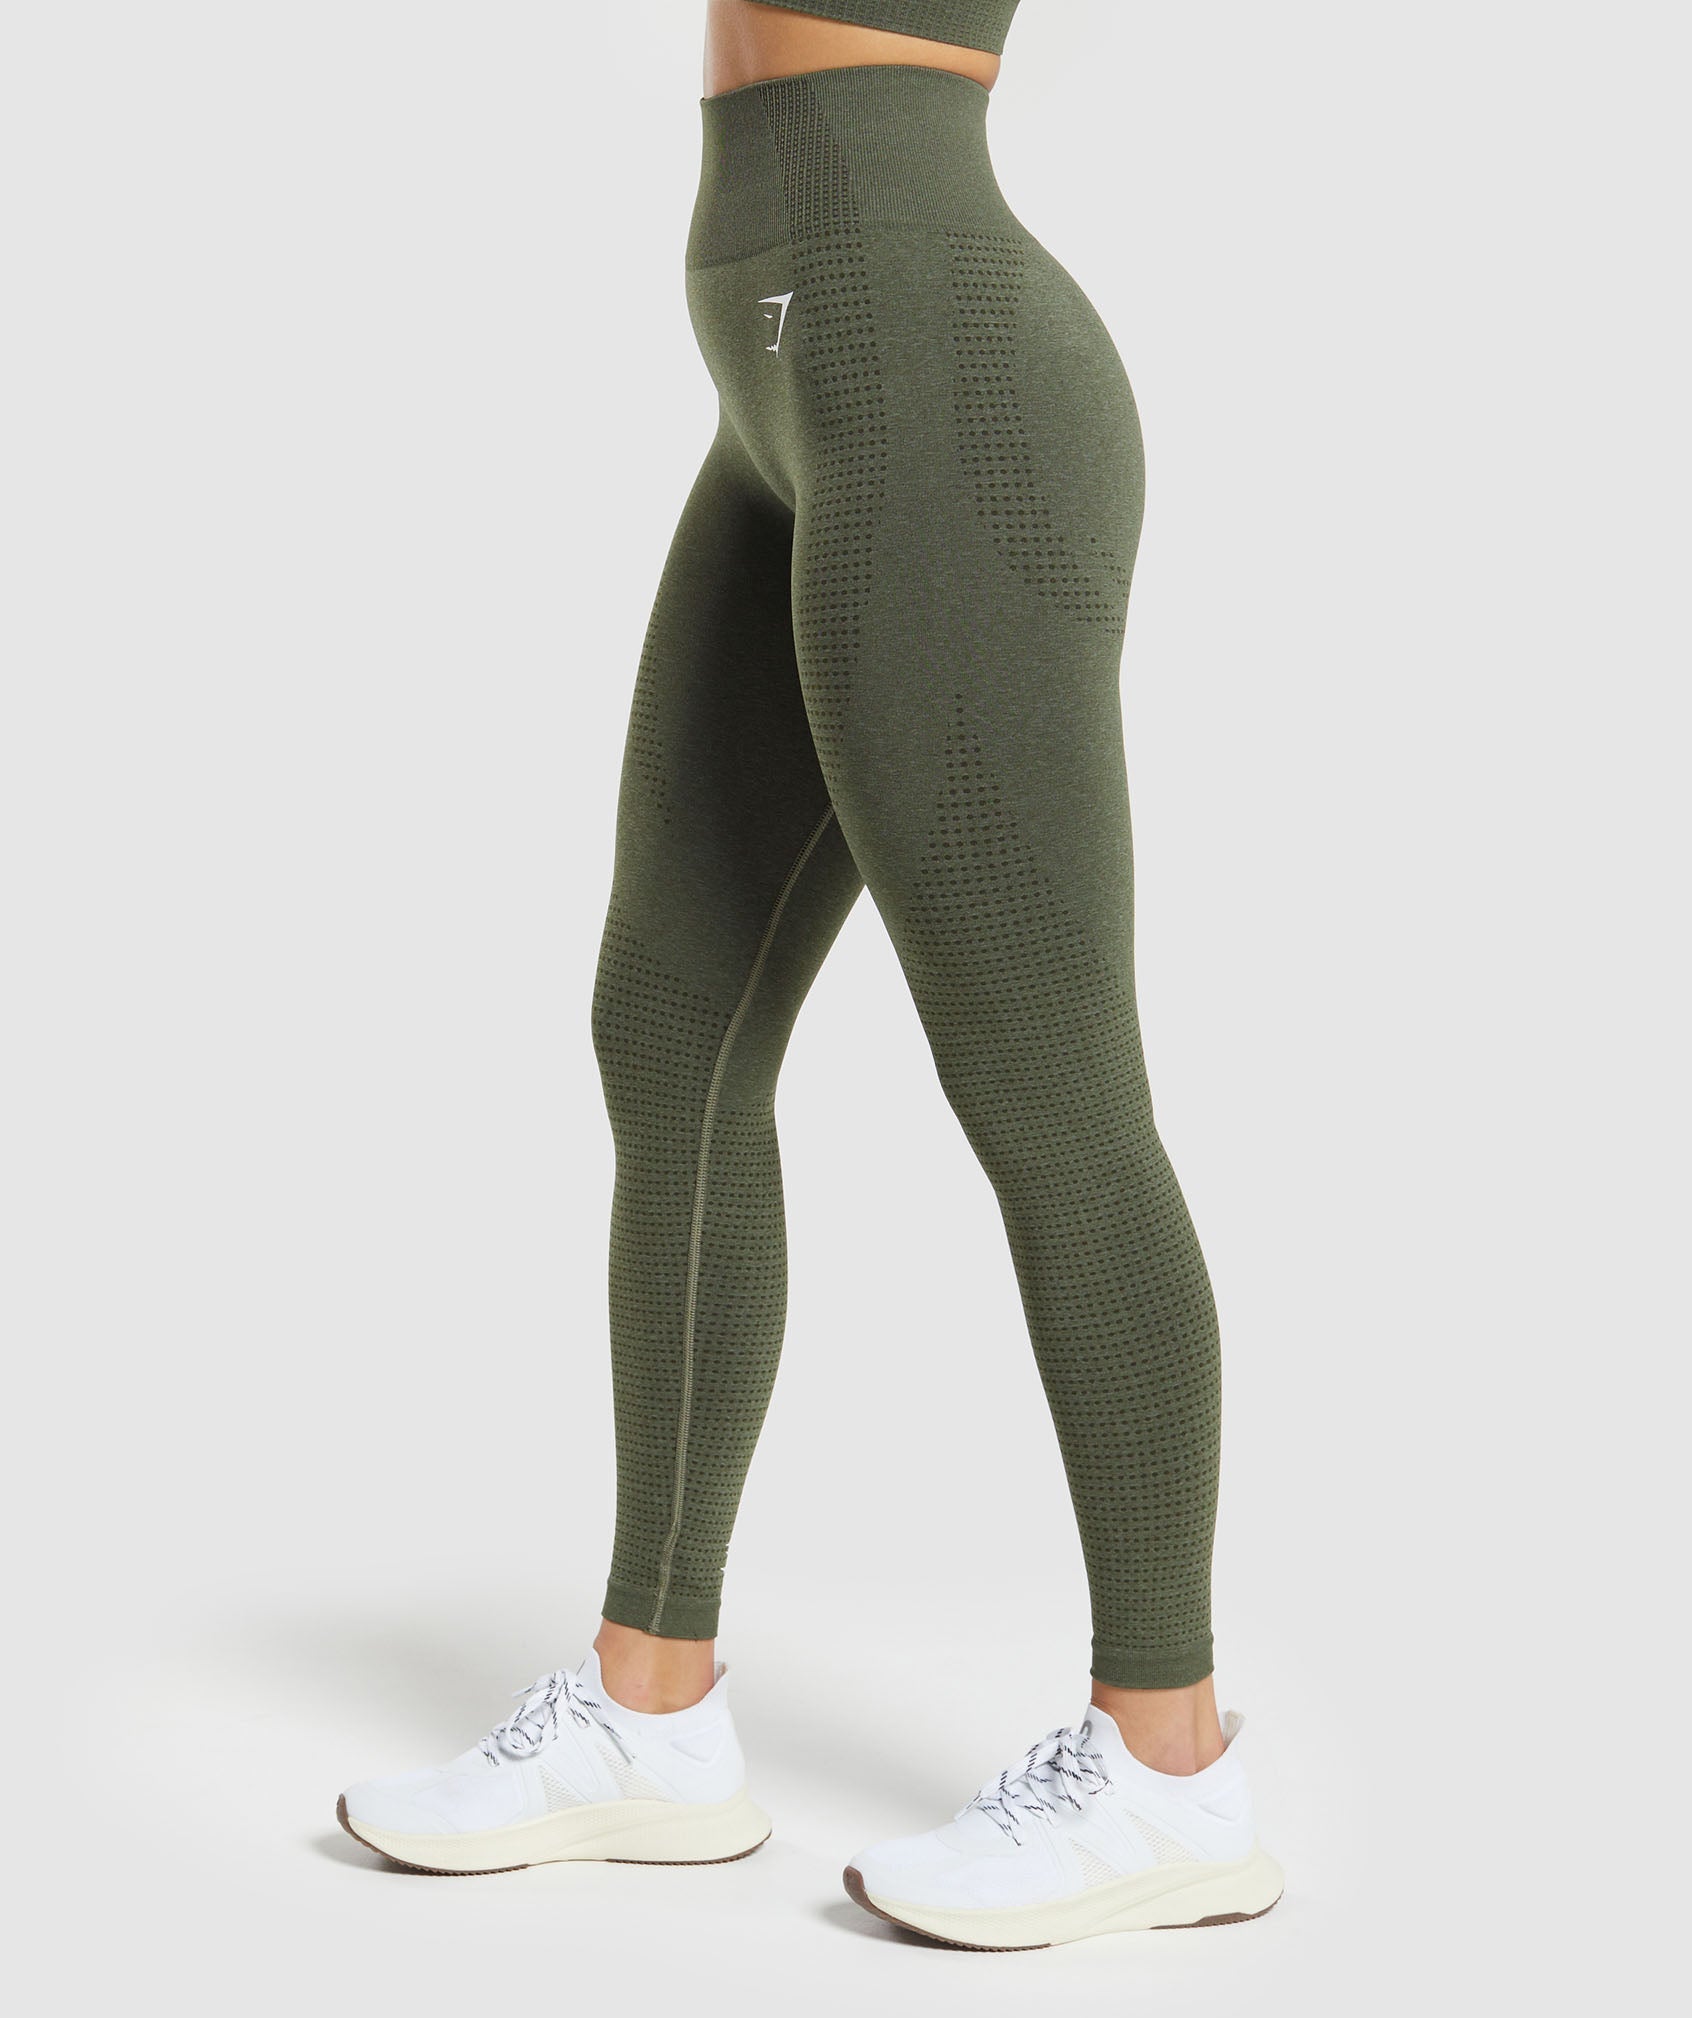 Women Anti-Cellulite Yoga Pants High Waist Ruched Butt Lift Leggings  Fitness | eBay